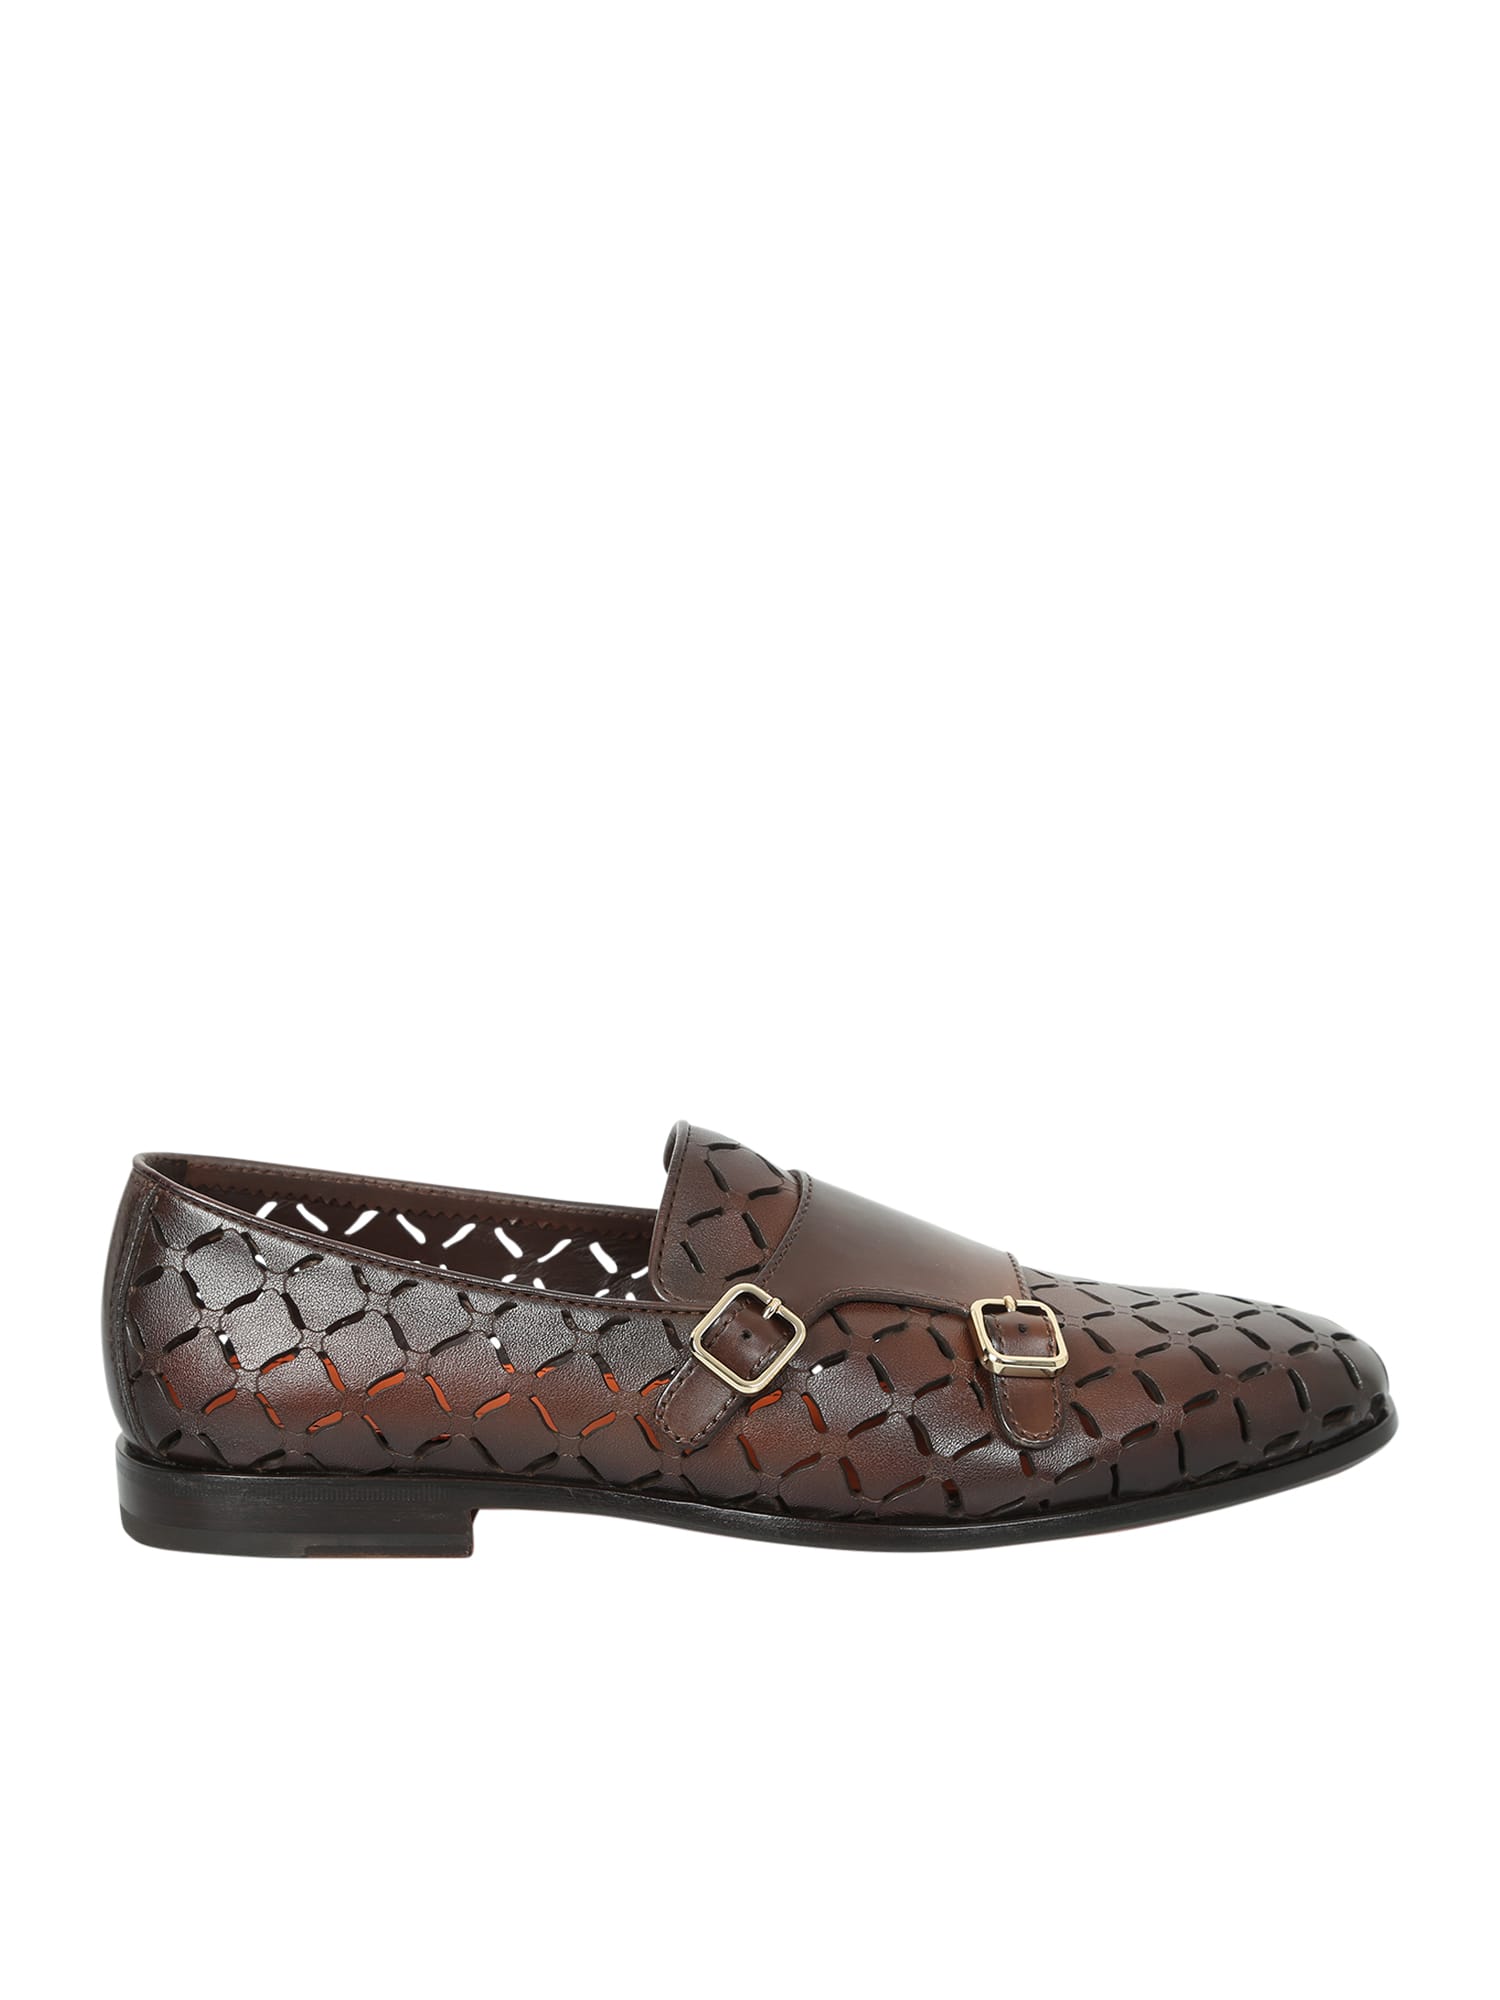 Santoni Perforated Leather Loafers